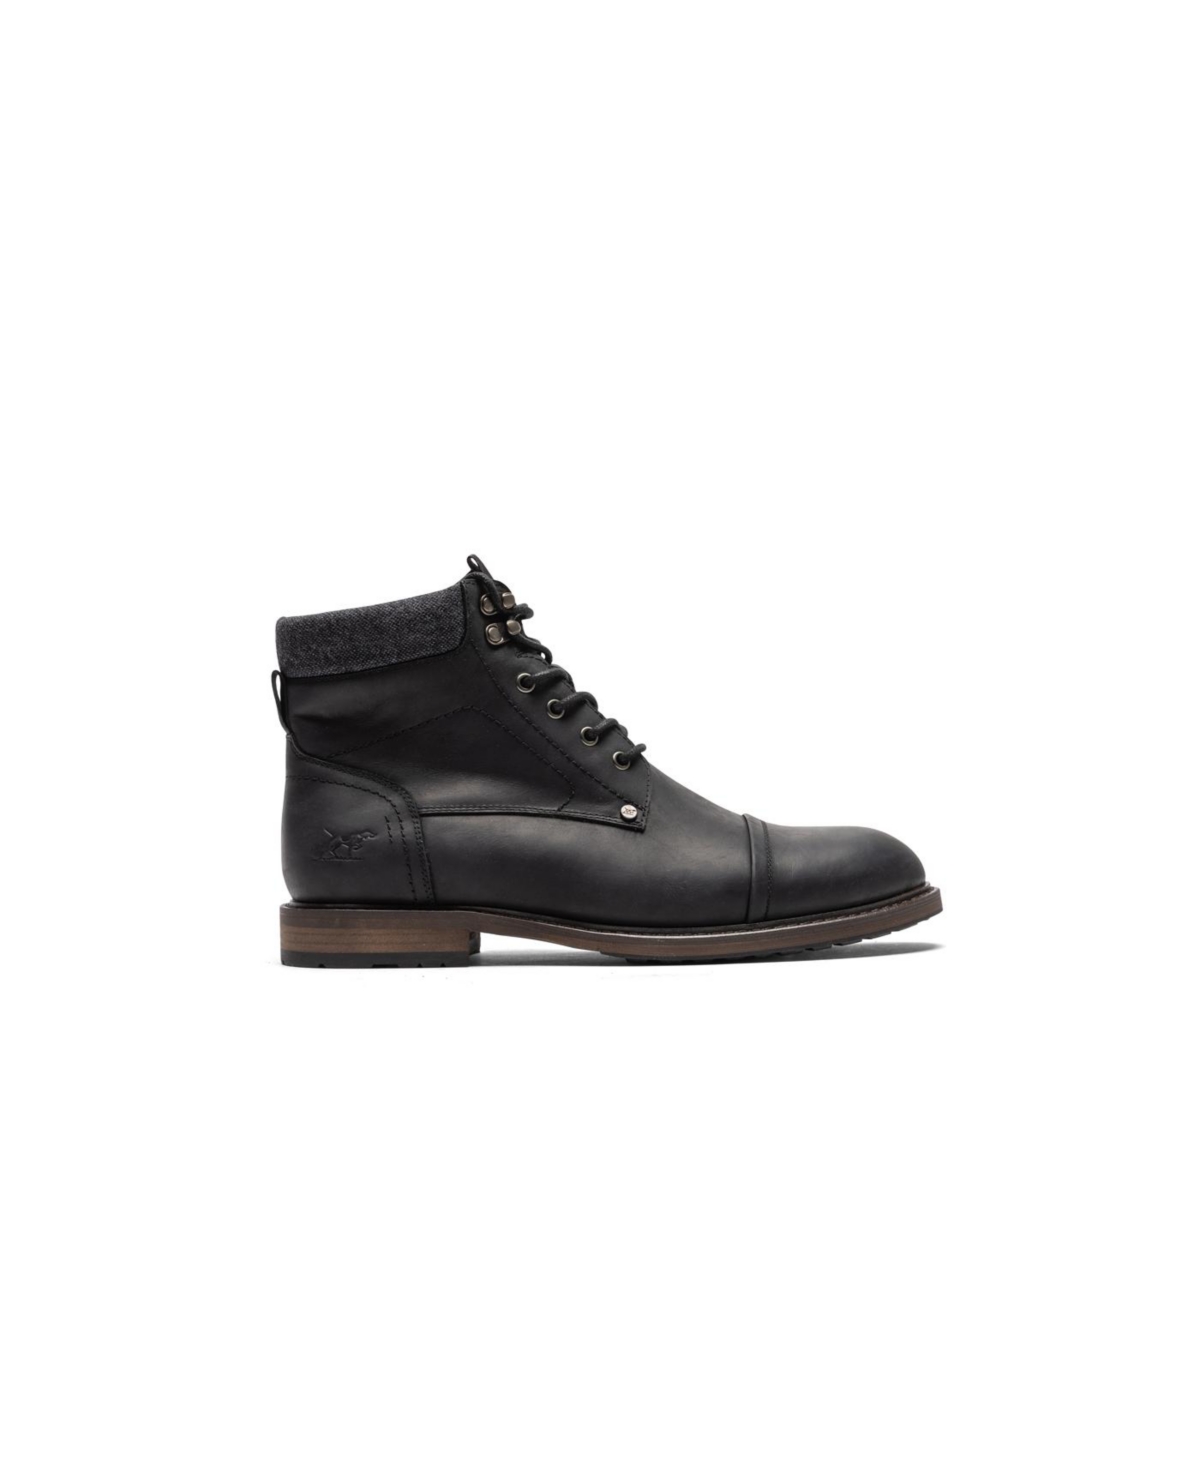 Men's Dobson Cc Military Boot - Onyx wash black